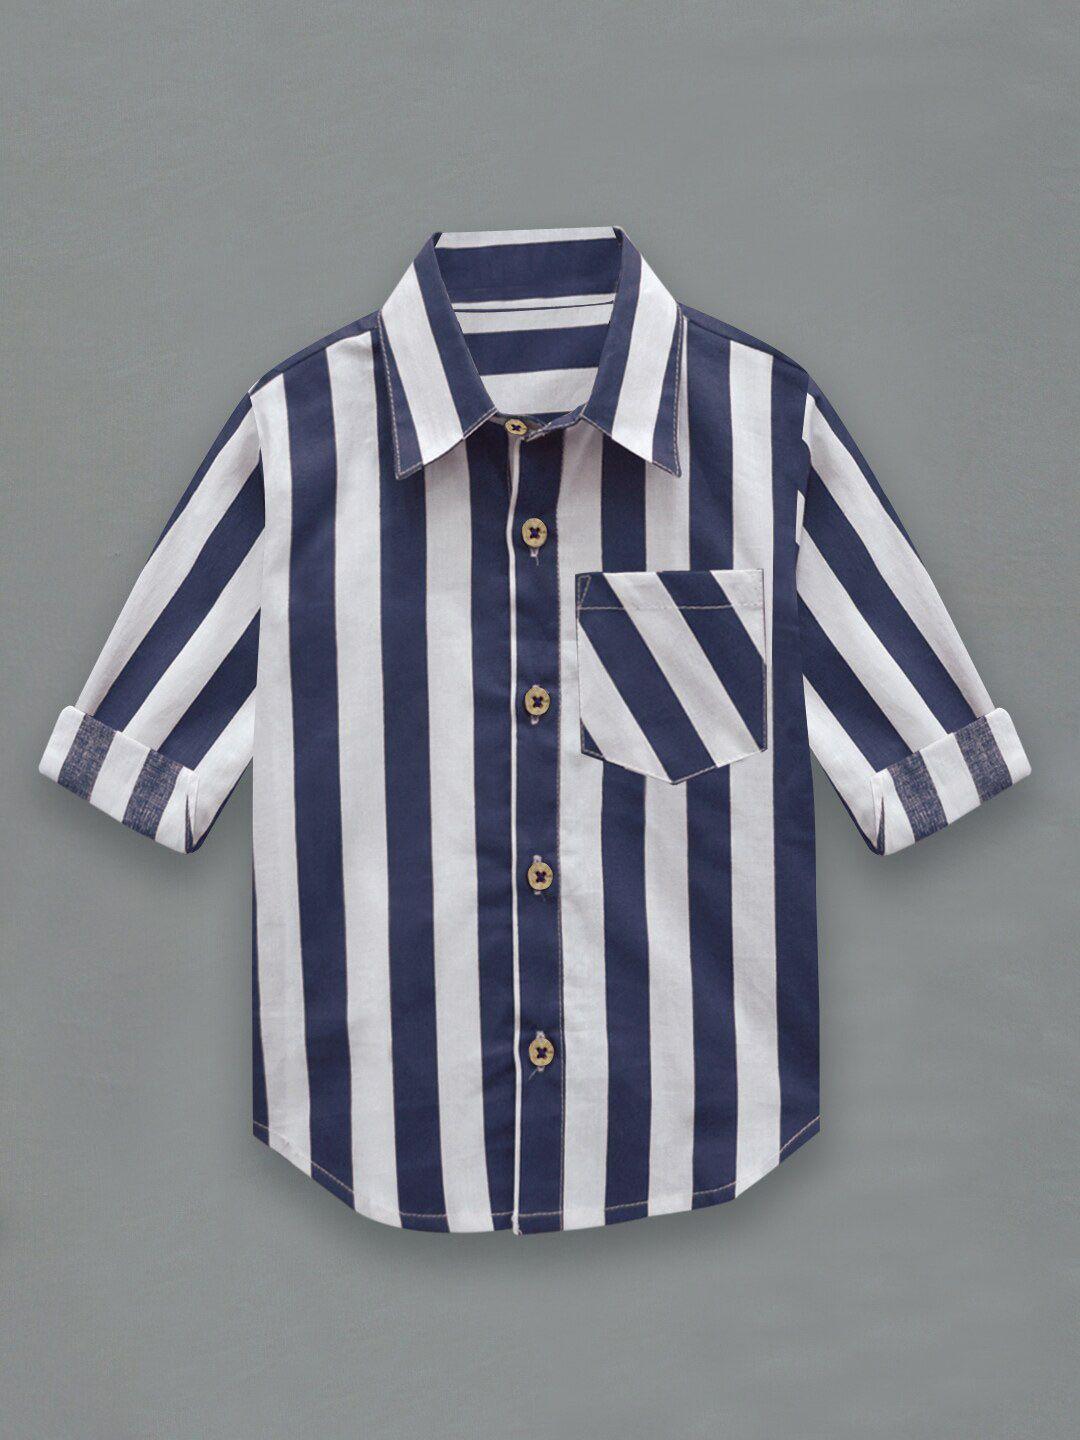 a t u n boys navy blue classic multi stripes striped casual cotton shirt